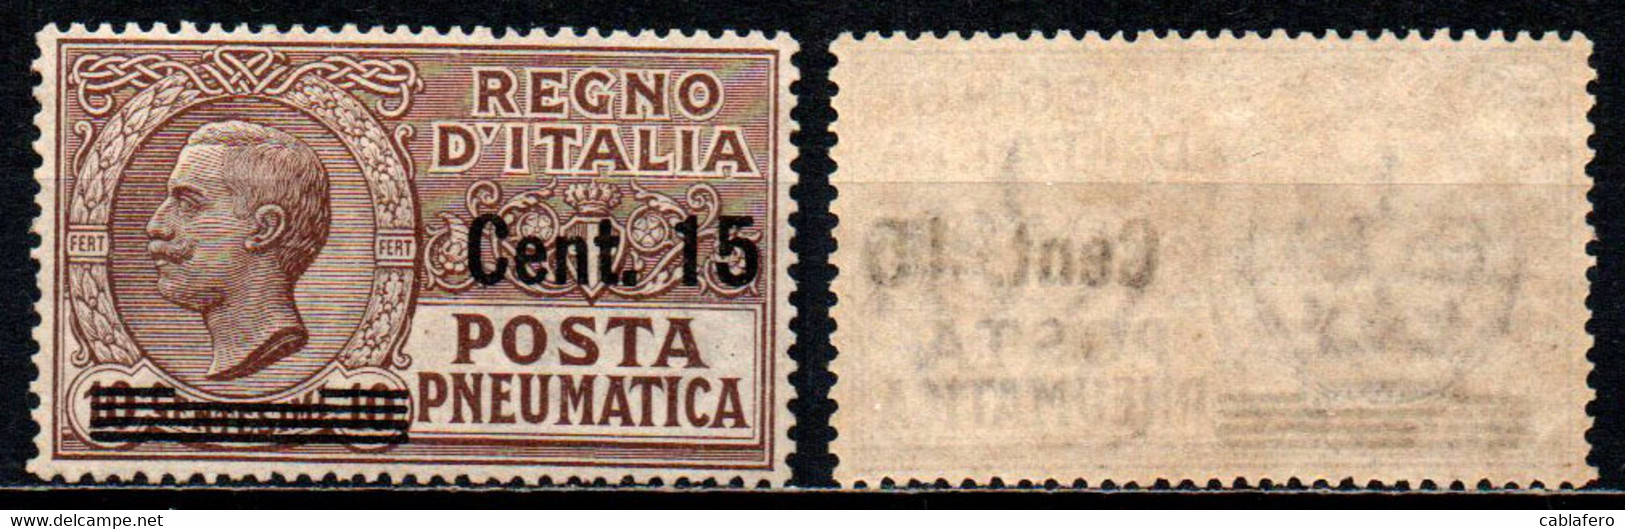 ITALIA REGNO - 1924 - EFFIGIE DI VITTORIO EMANUELE III - SOPRASTAMPA DA 15 CENT. SU 10 CENT. - MNH - Pneumatic Mail